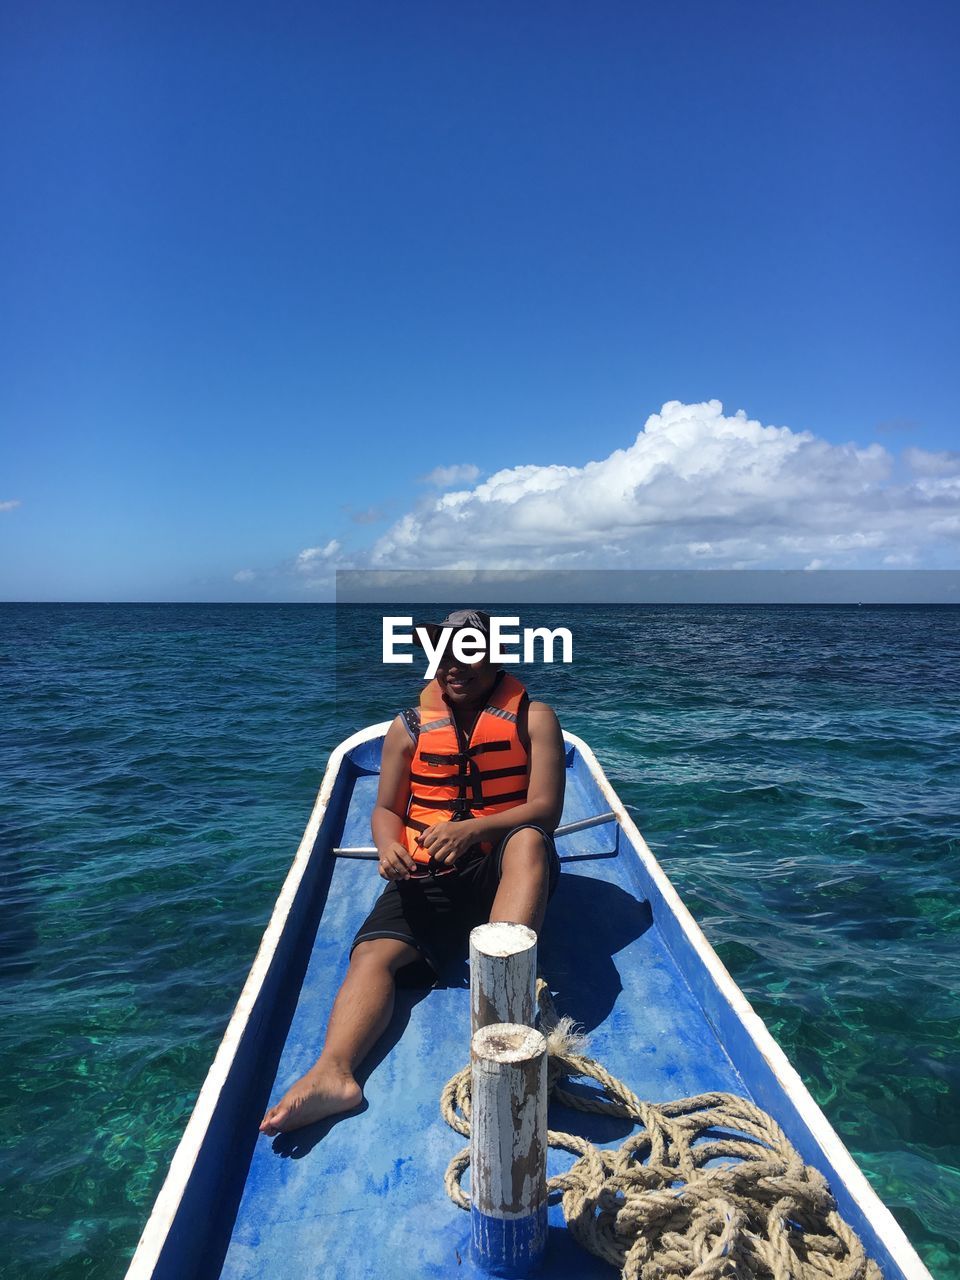 Man sitting on boat in sea against blue sky